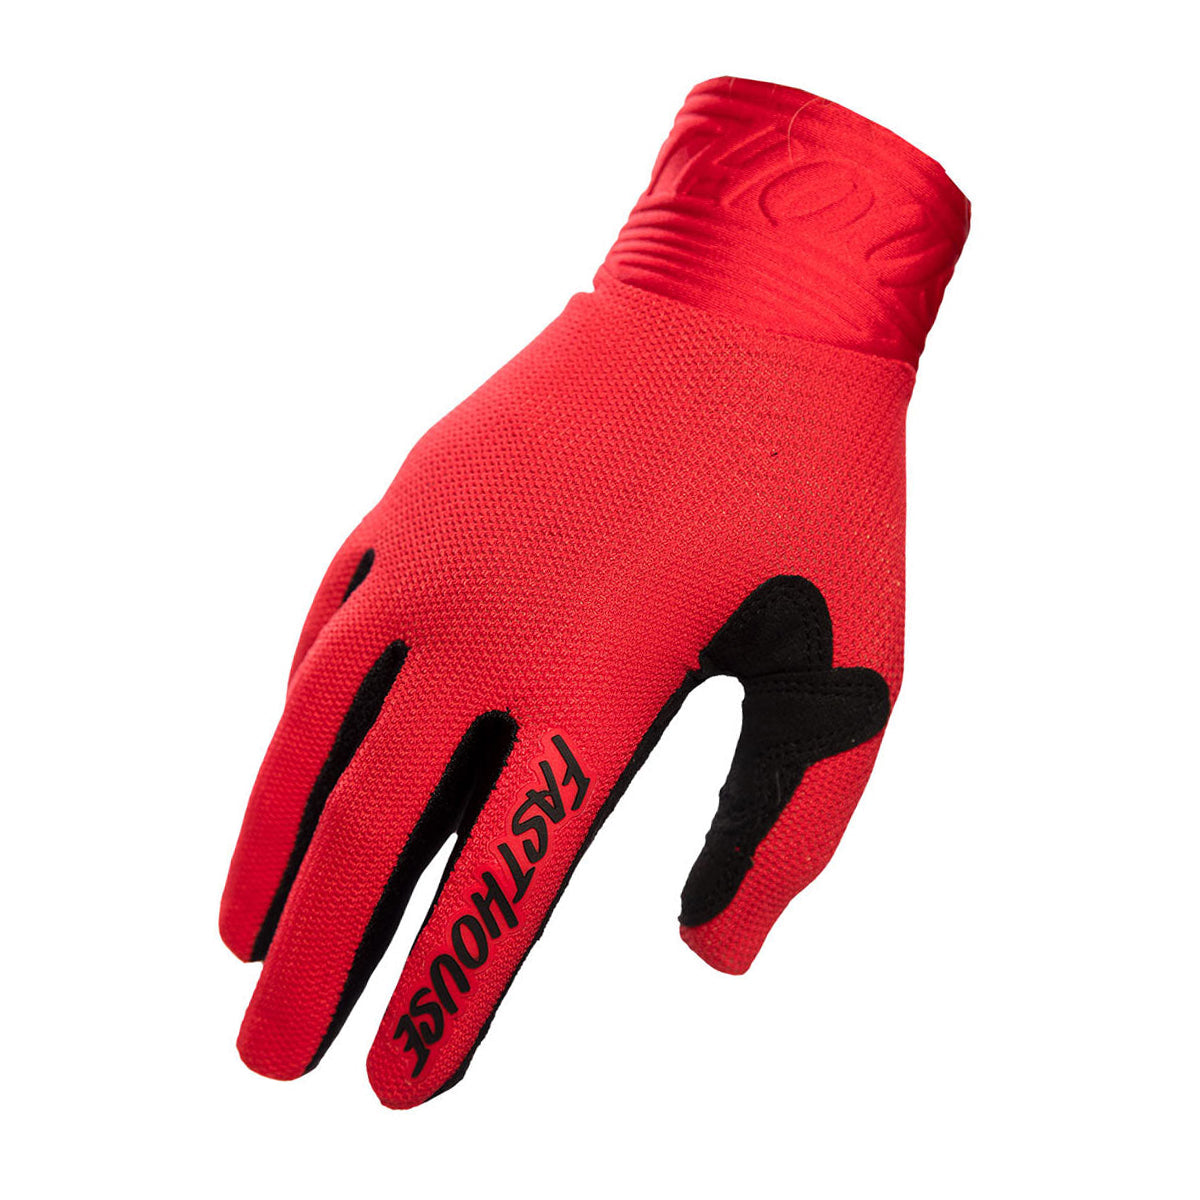 Wheeler Glove - Red